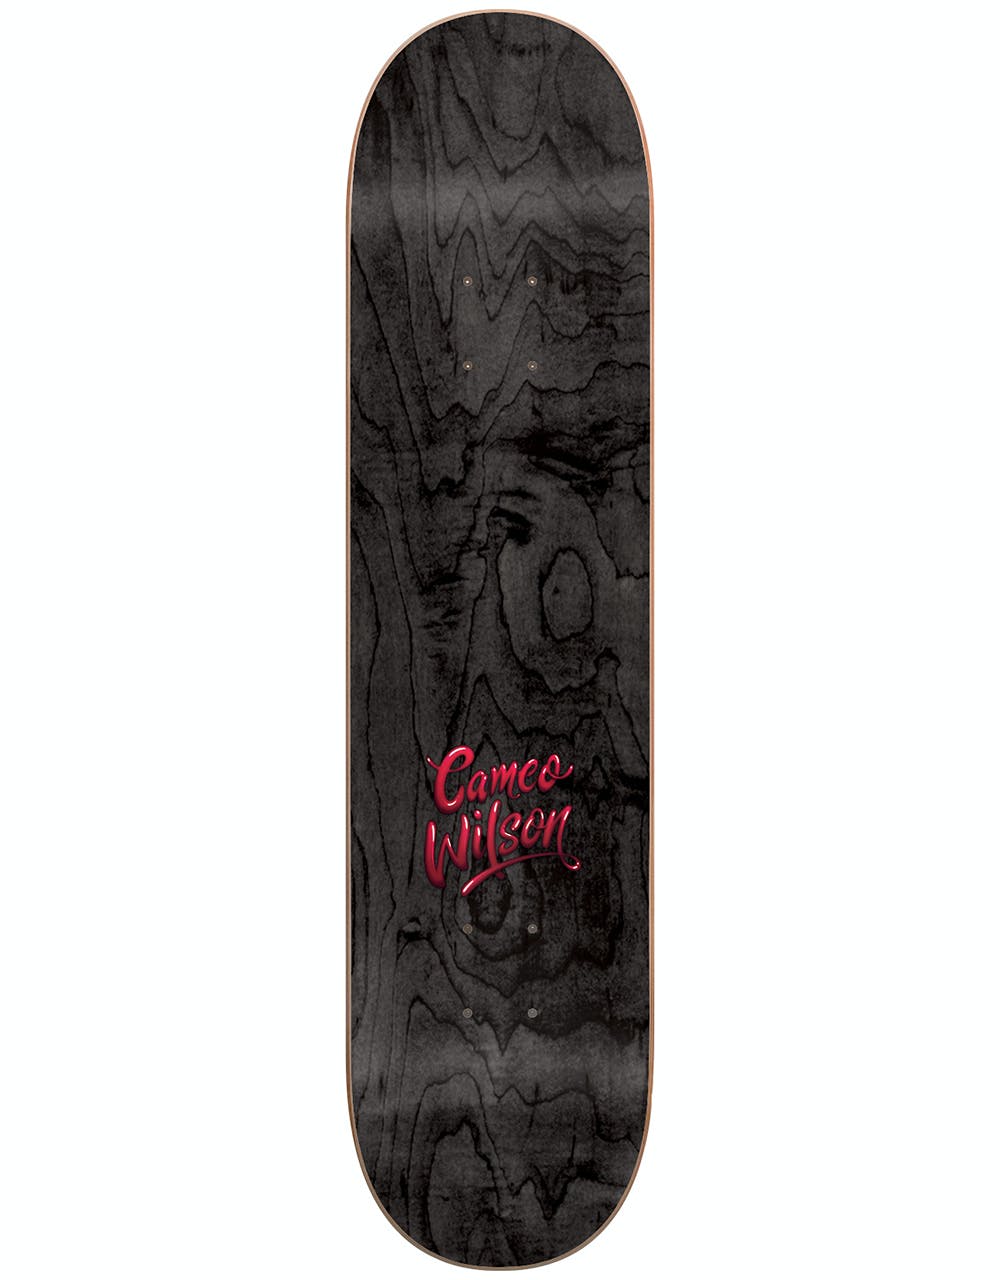 Darkstar Cameo Cherry Skateboard Deck - 8.25"